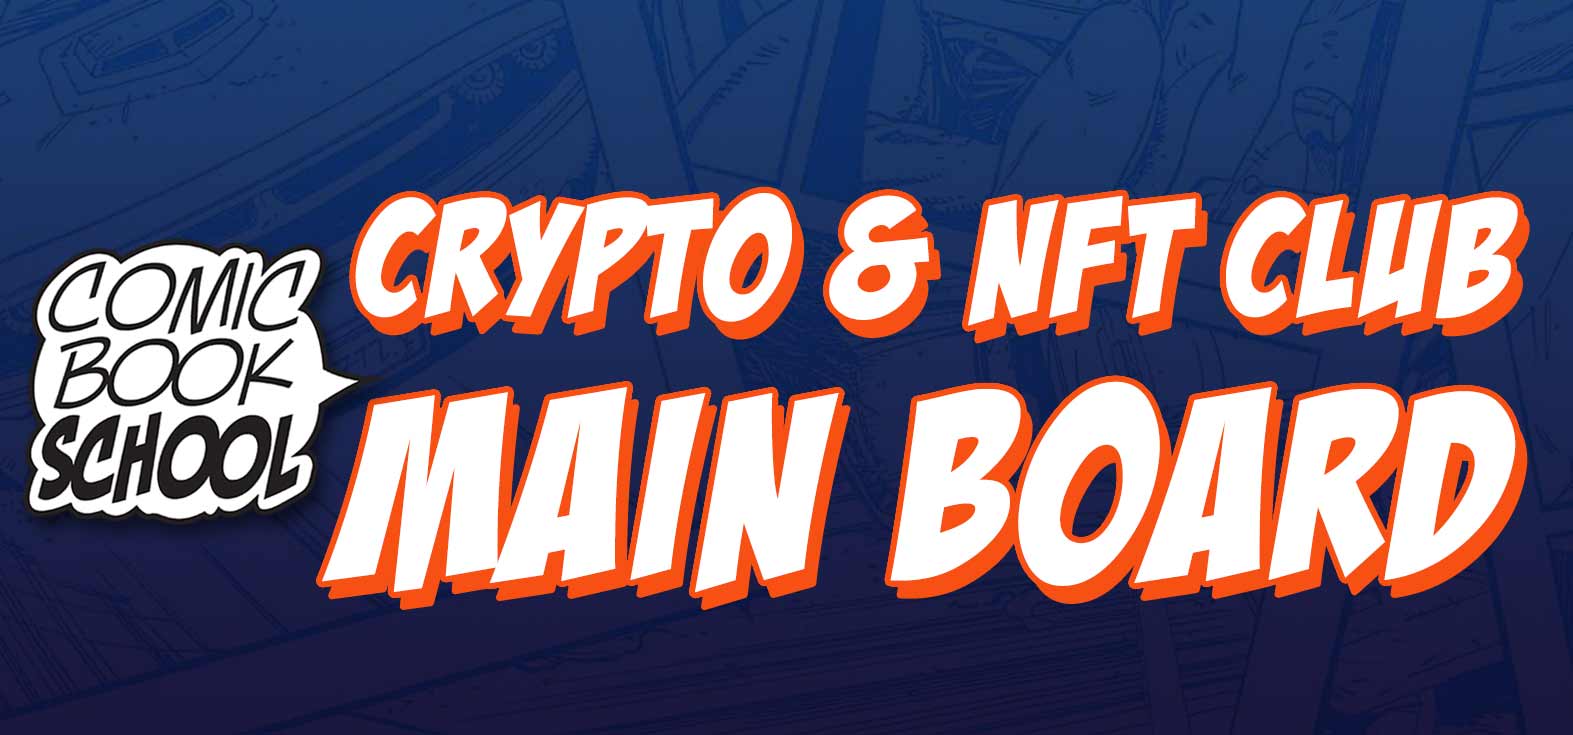 crypto NFT Club Forum Header 2